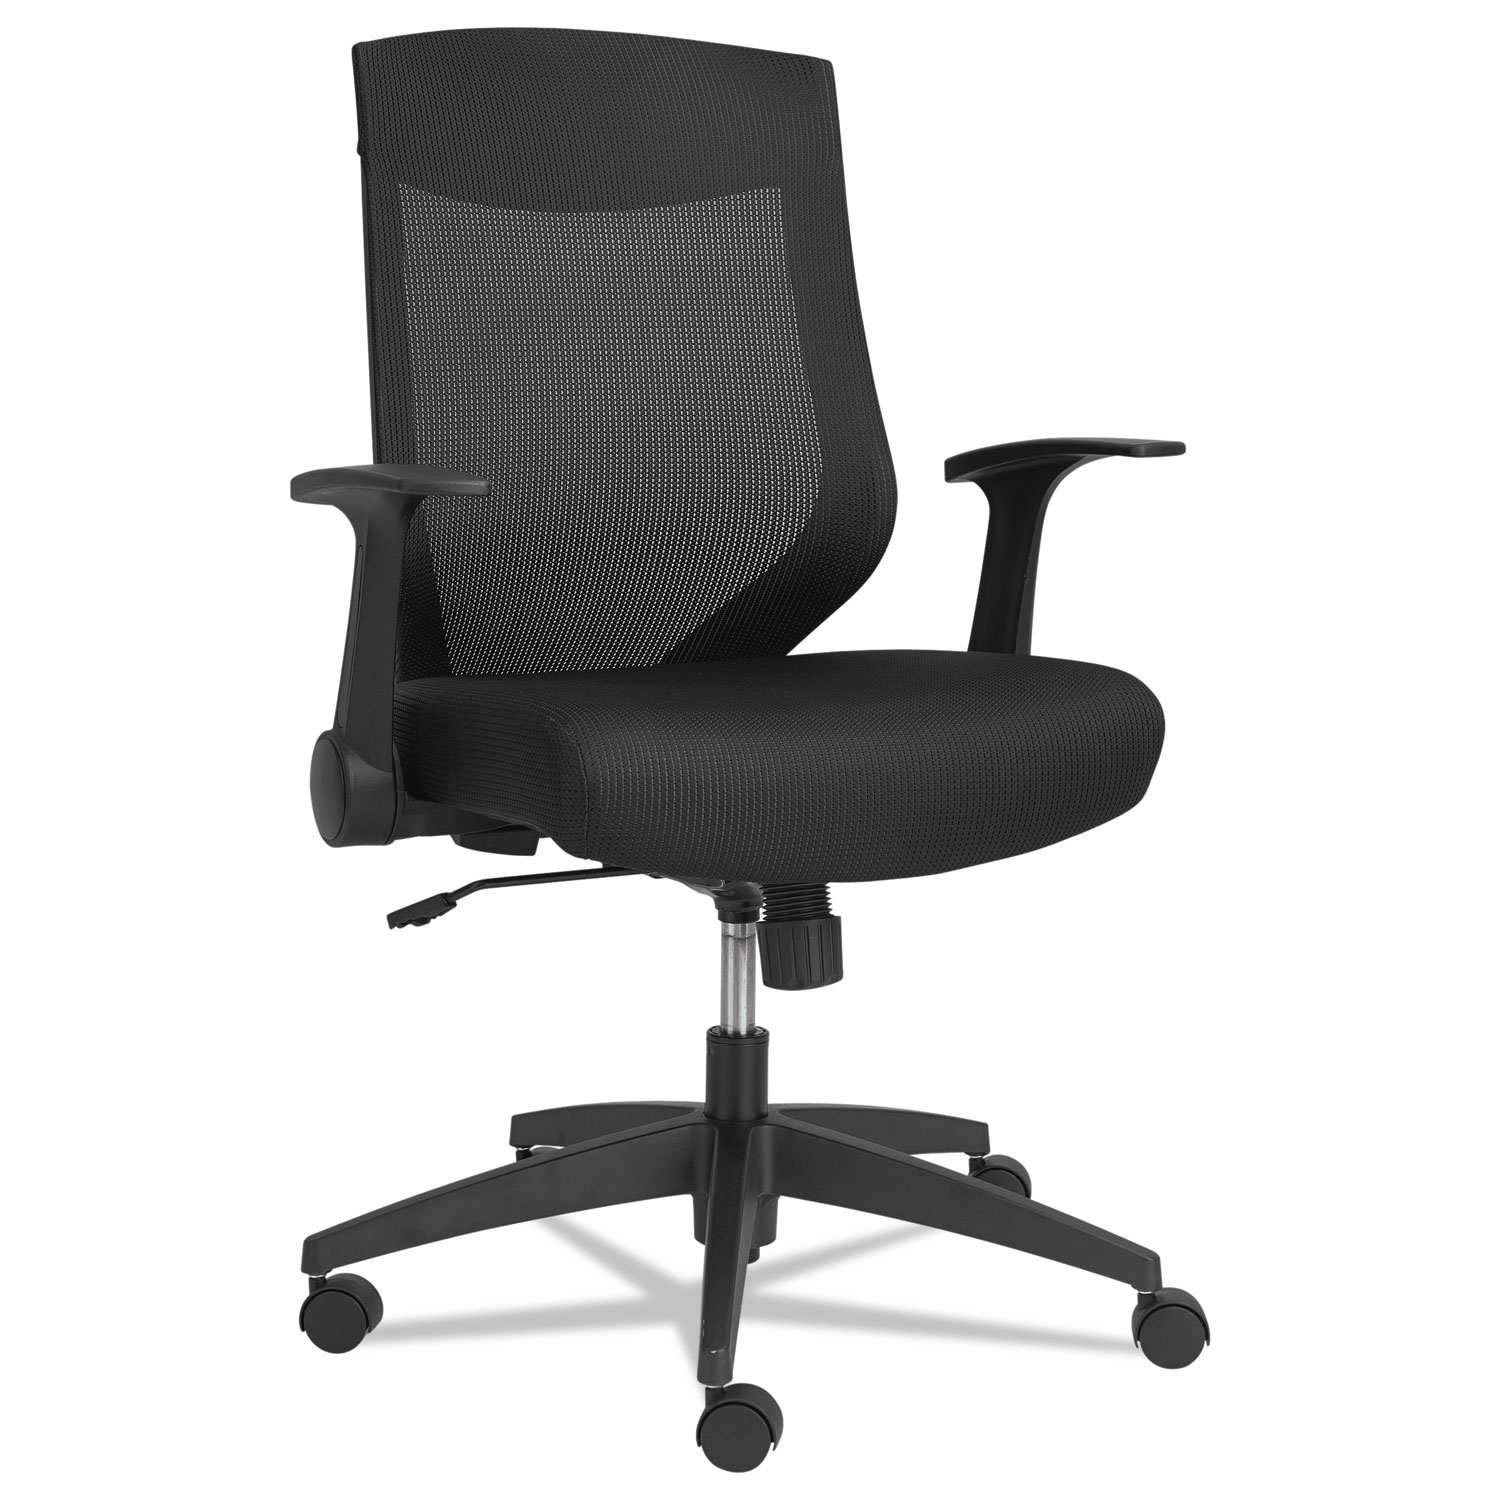  Alera ALEEBK4217 Alera EB-K Series Synchro Mid-Back Flip Arm Mesh-Chair, Supports up to 275 lbs., Black Seat/Black Back, Black Base (ALEEBK4217) 